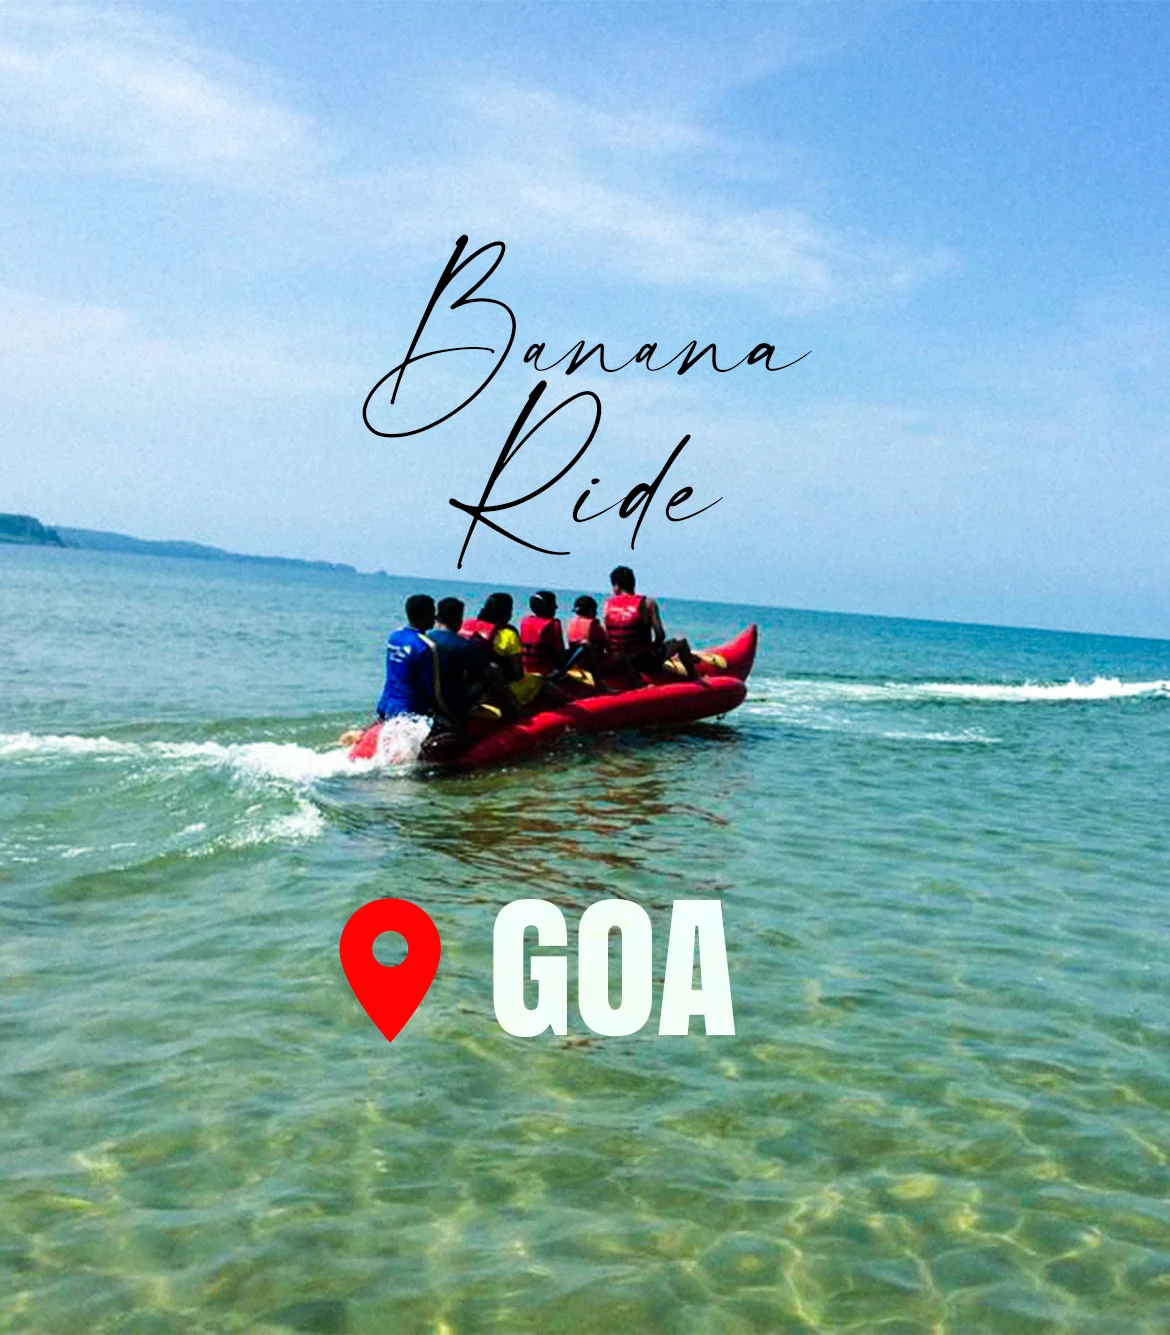 Banana Ride at Mobor Beach in South Goa